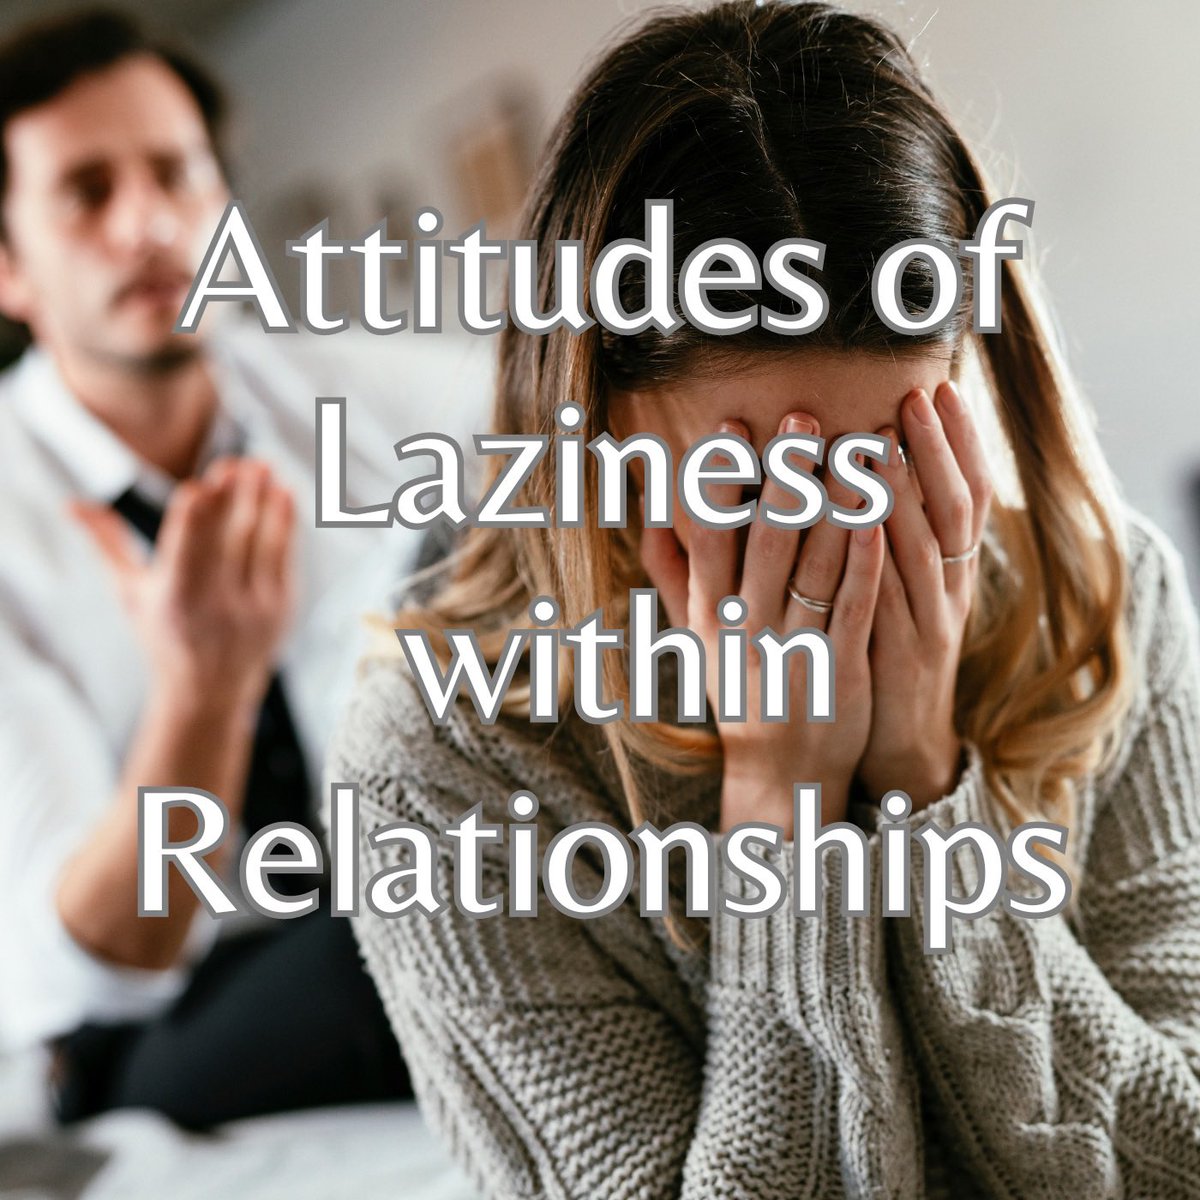 Breaking the Mold: Exploring Laziness in Men within Relationships #RelationshipAttitudes #LazyOrLaidBack #PodcastDiscussion #mtuniwatupodcast #podcasting #podcaster #podcast #laziness #relationship #partnership #marriage #laziness #family #familyfirst